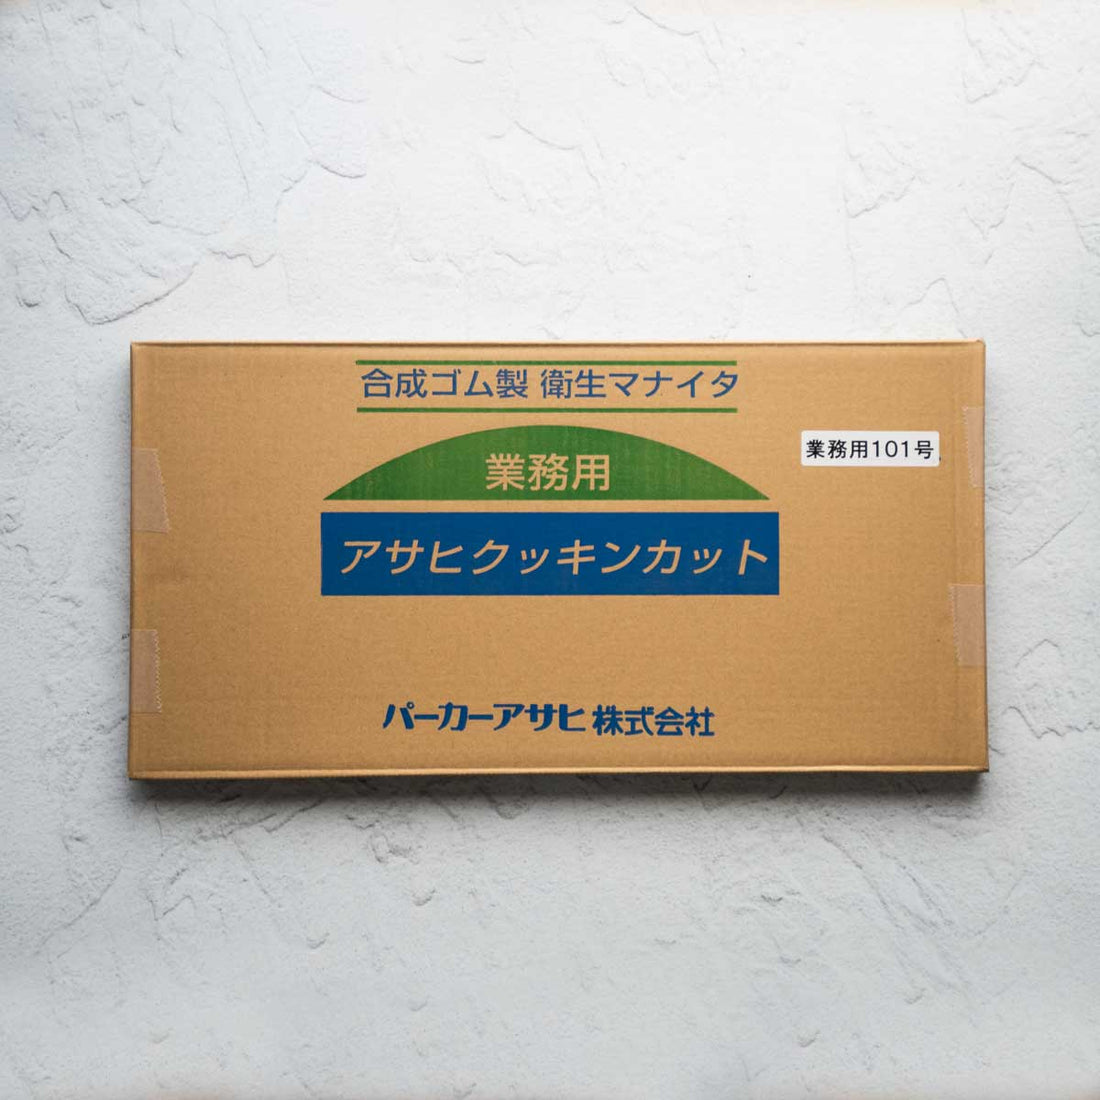 Asahi Professional Synthetic Rubber Cutting Board - 600x330x15